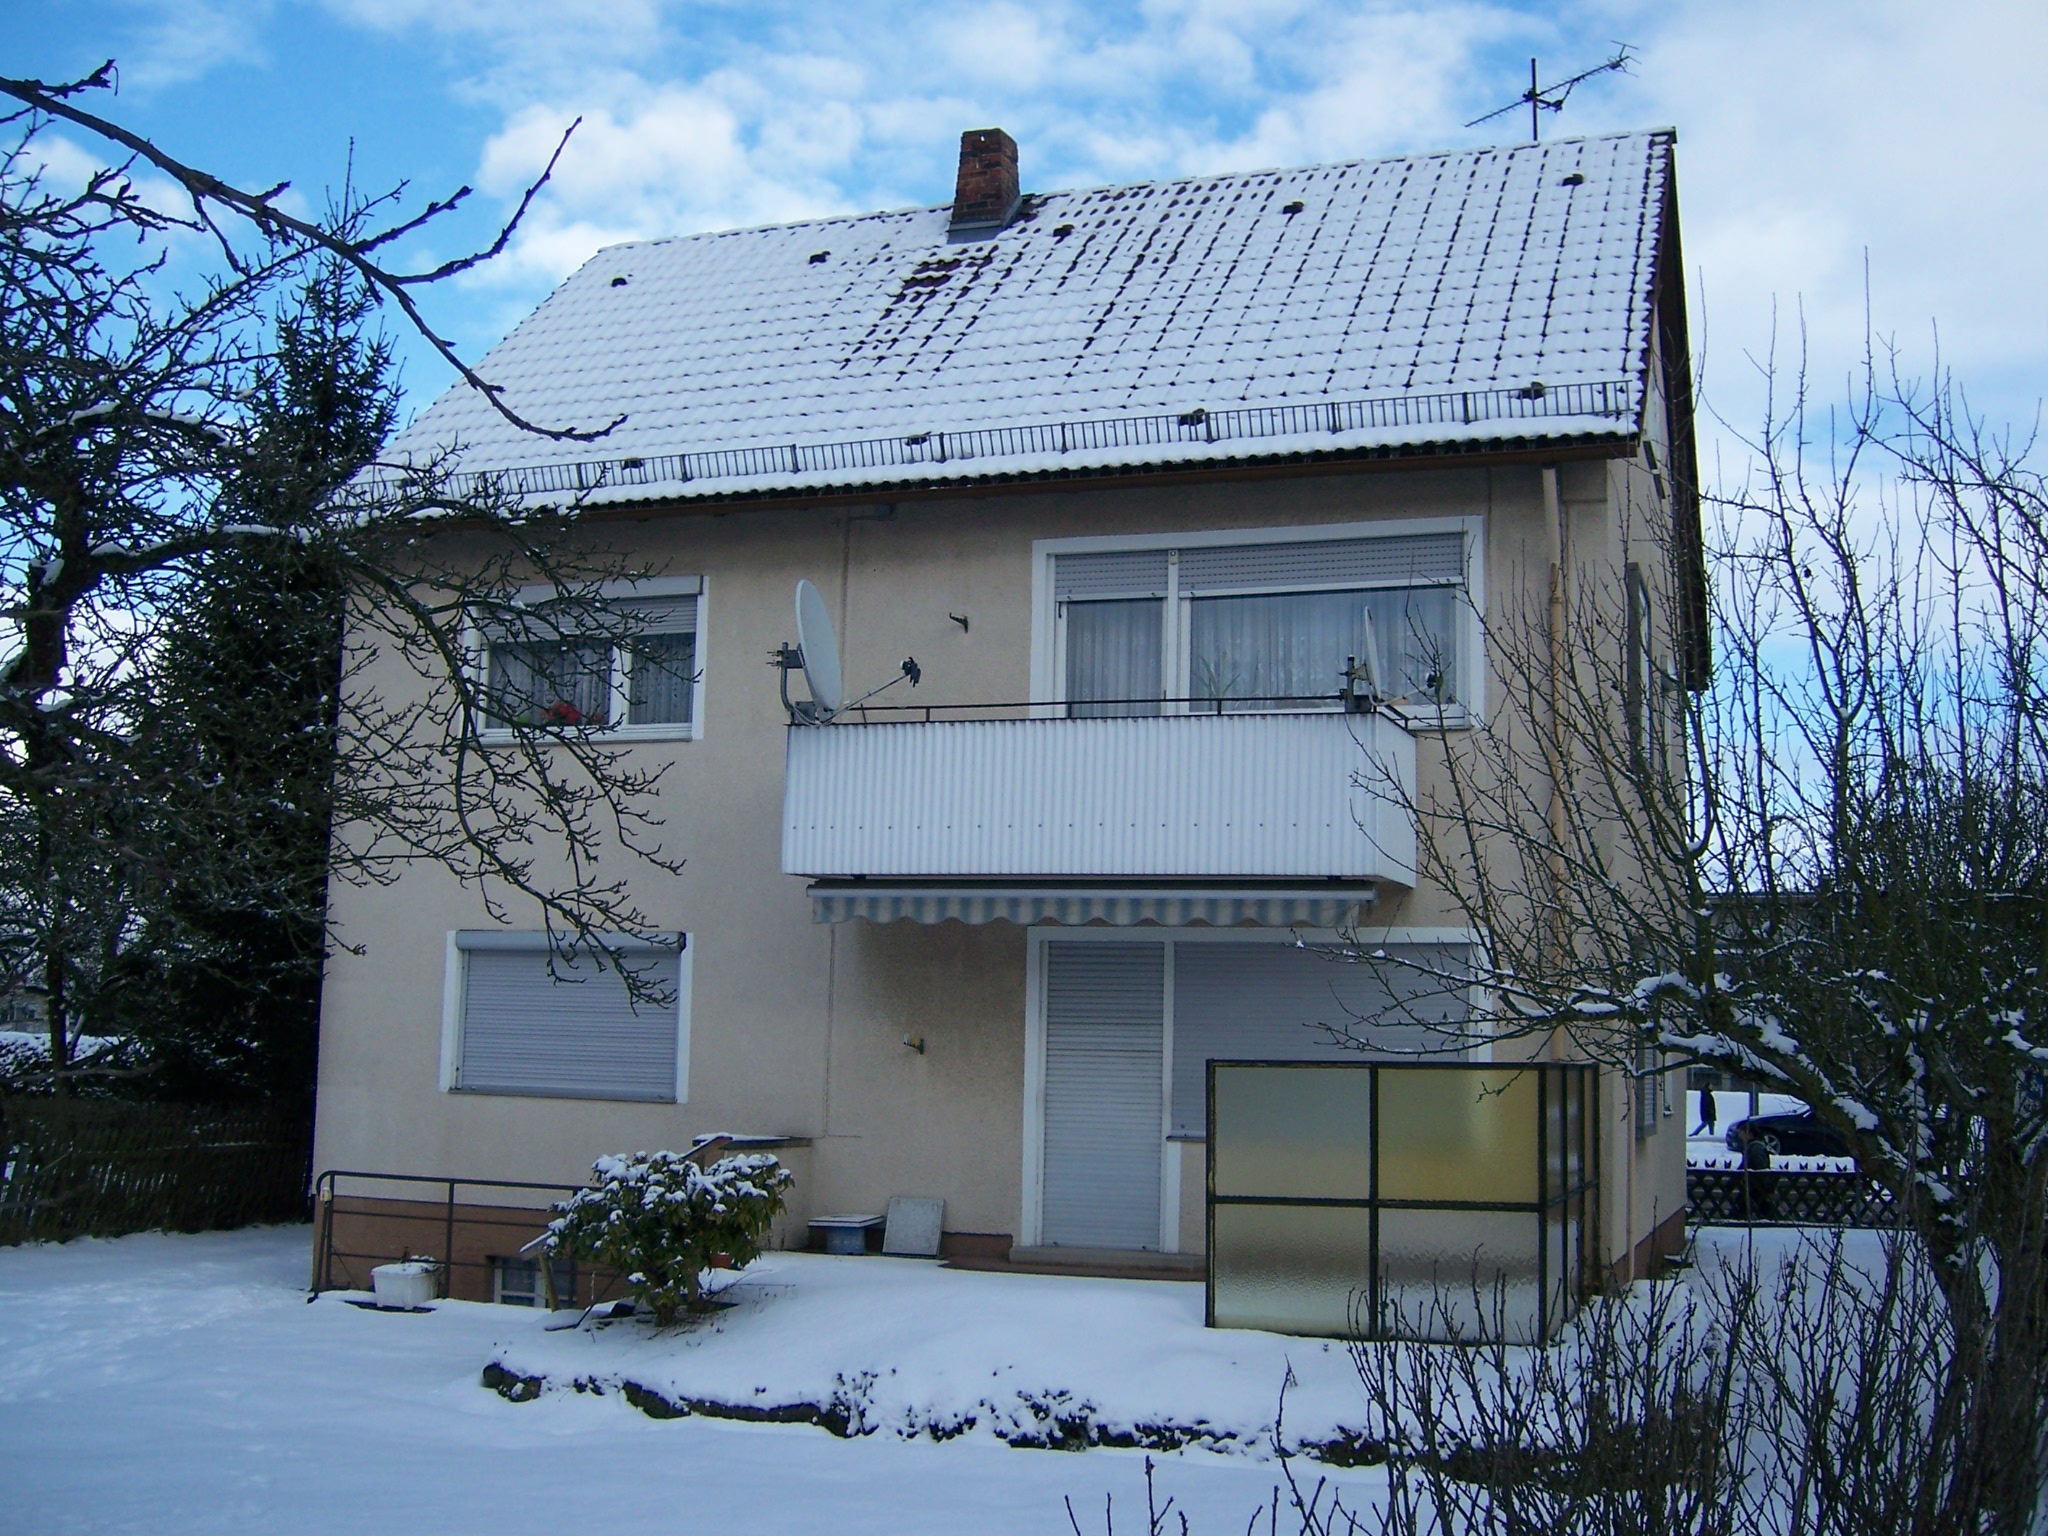 LEinfelden Winter bahnhofstr 9